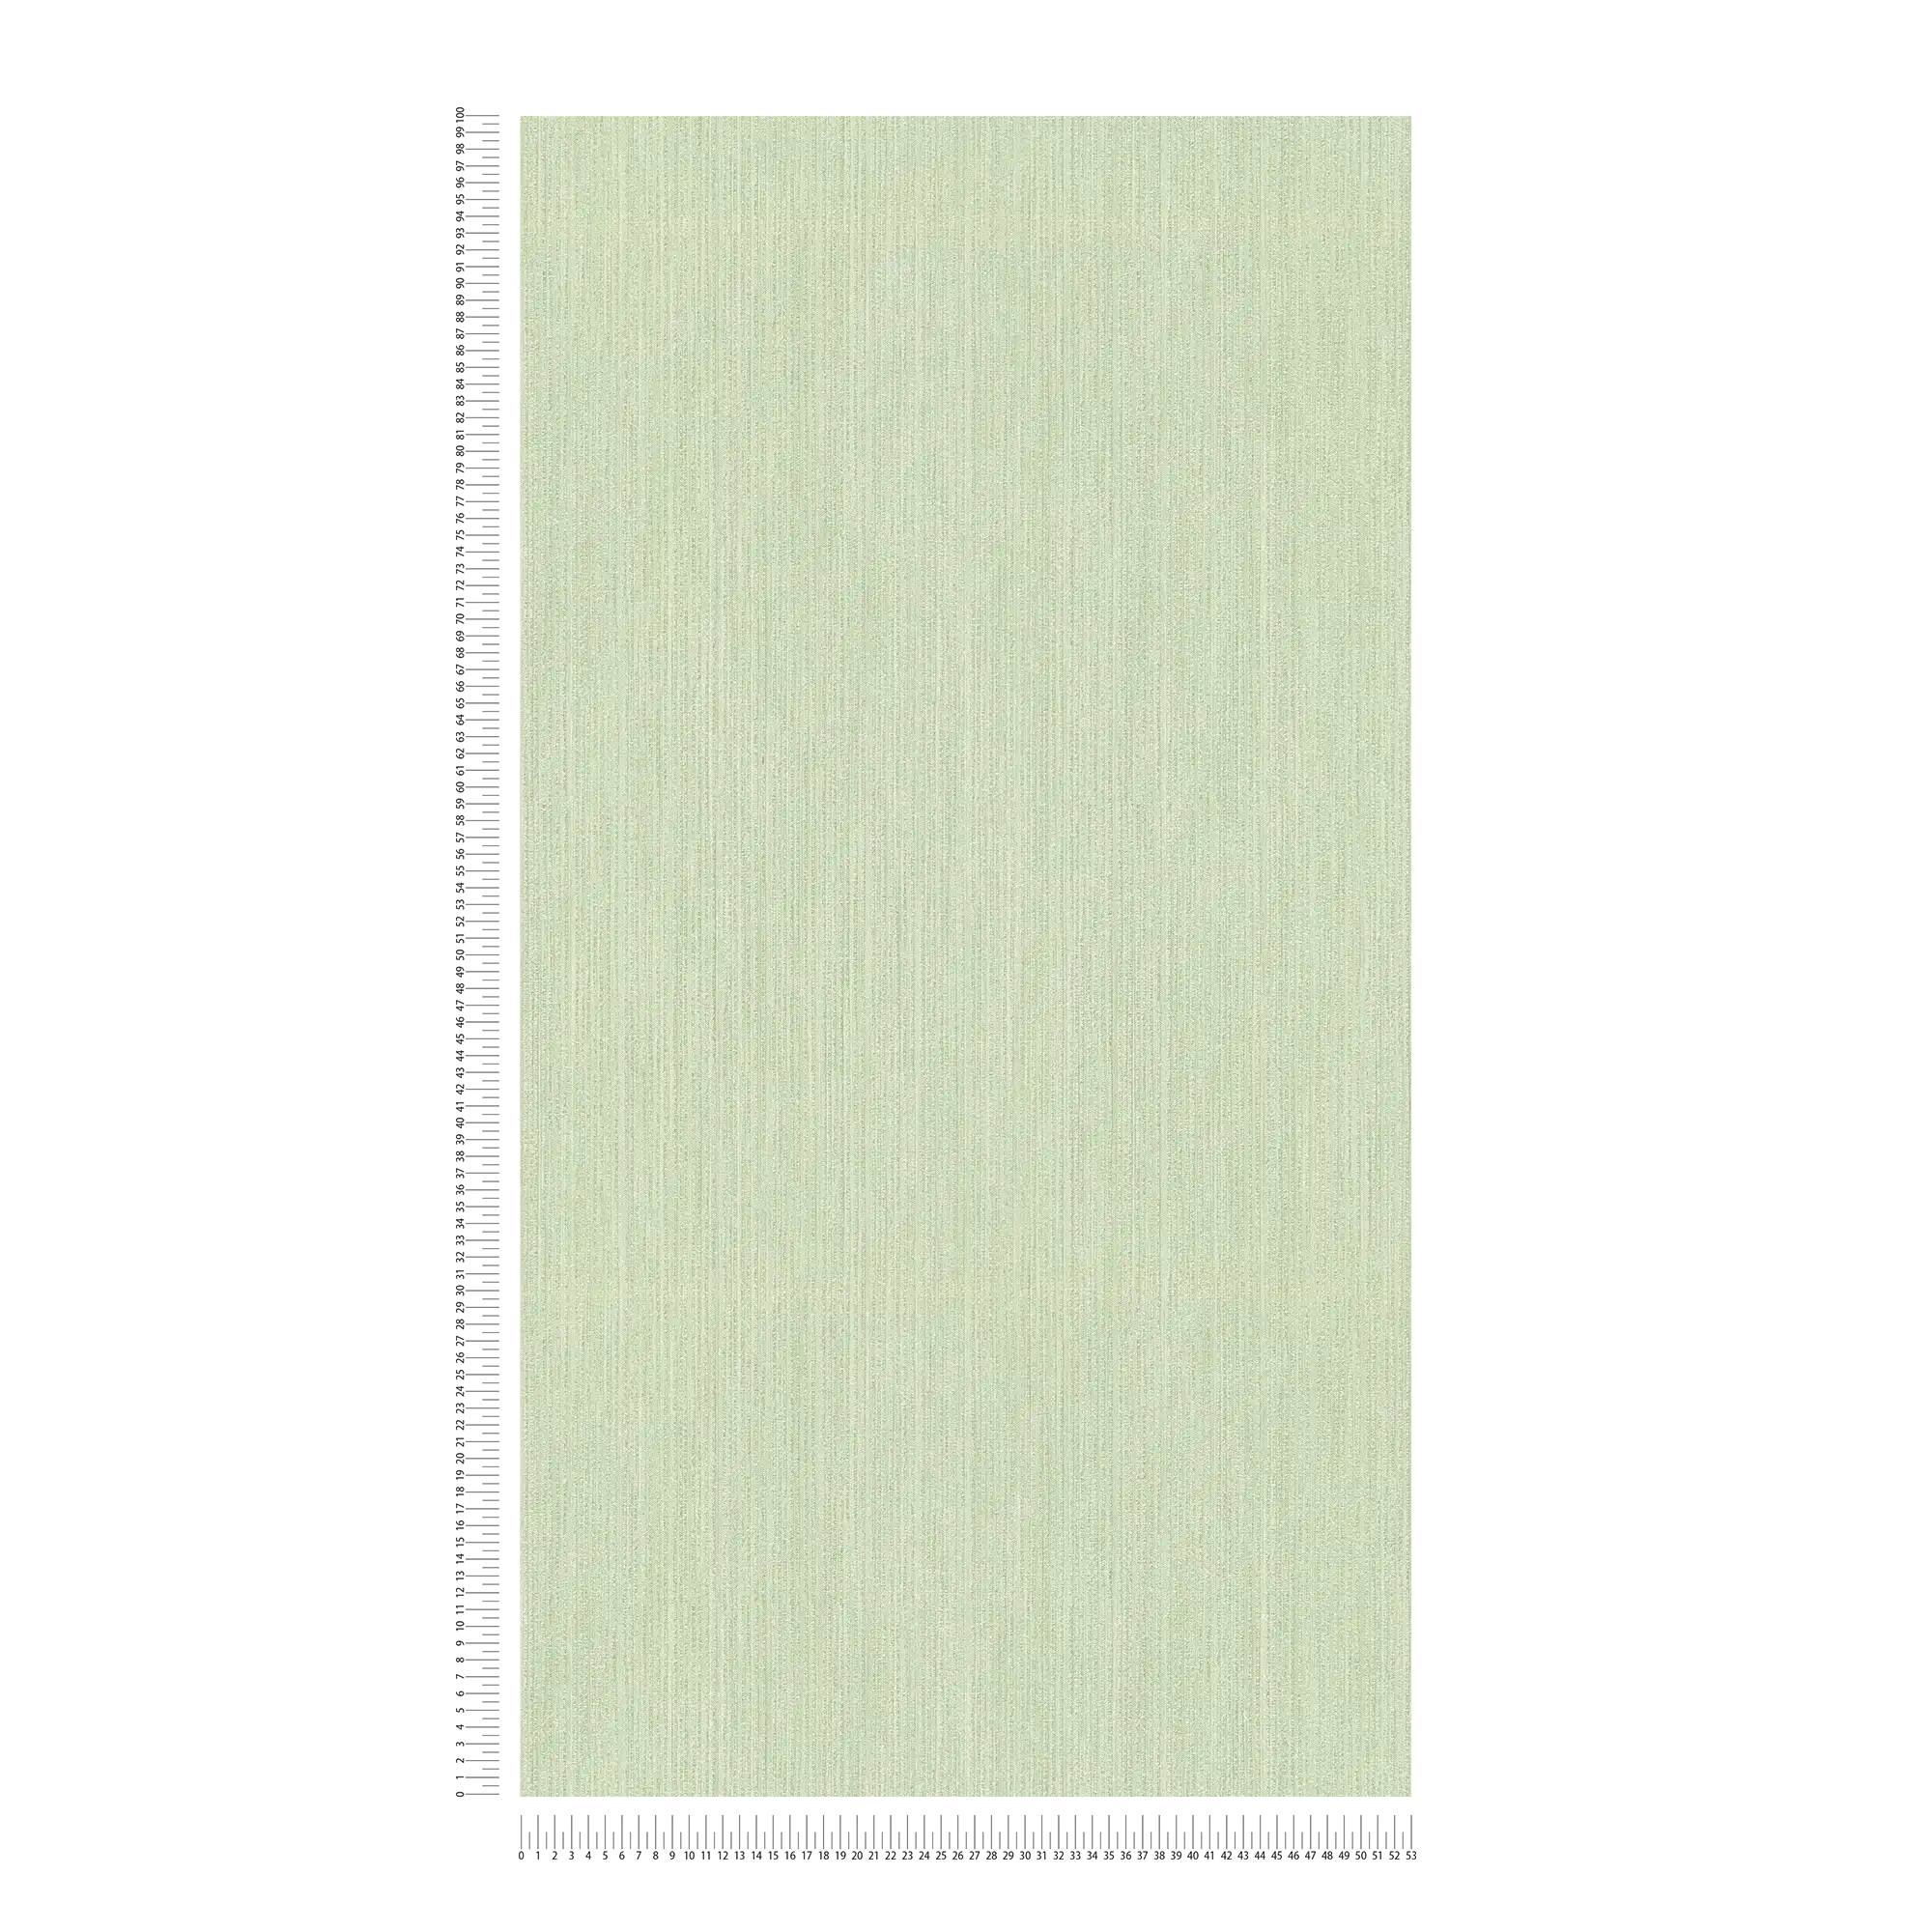             Carta da parati unitaria MICHALSKY con struttura cromatica screziata - verde
        